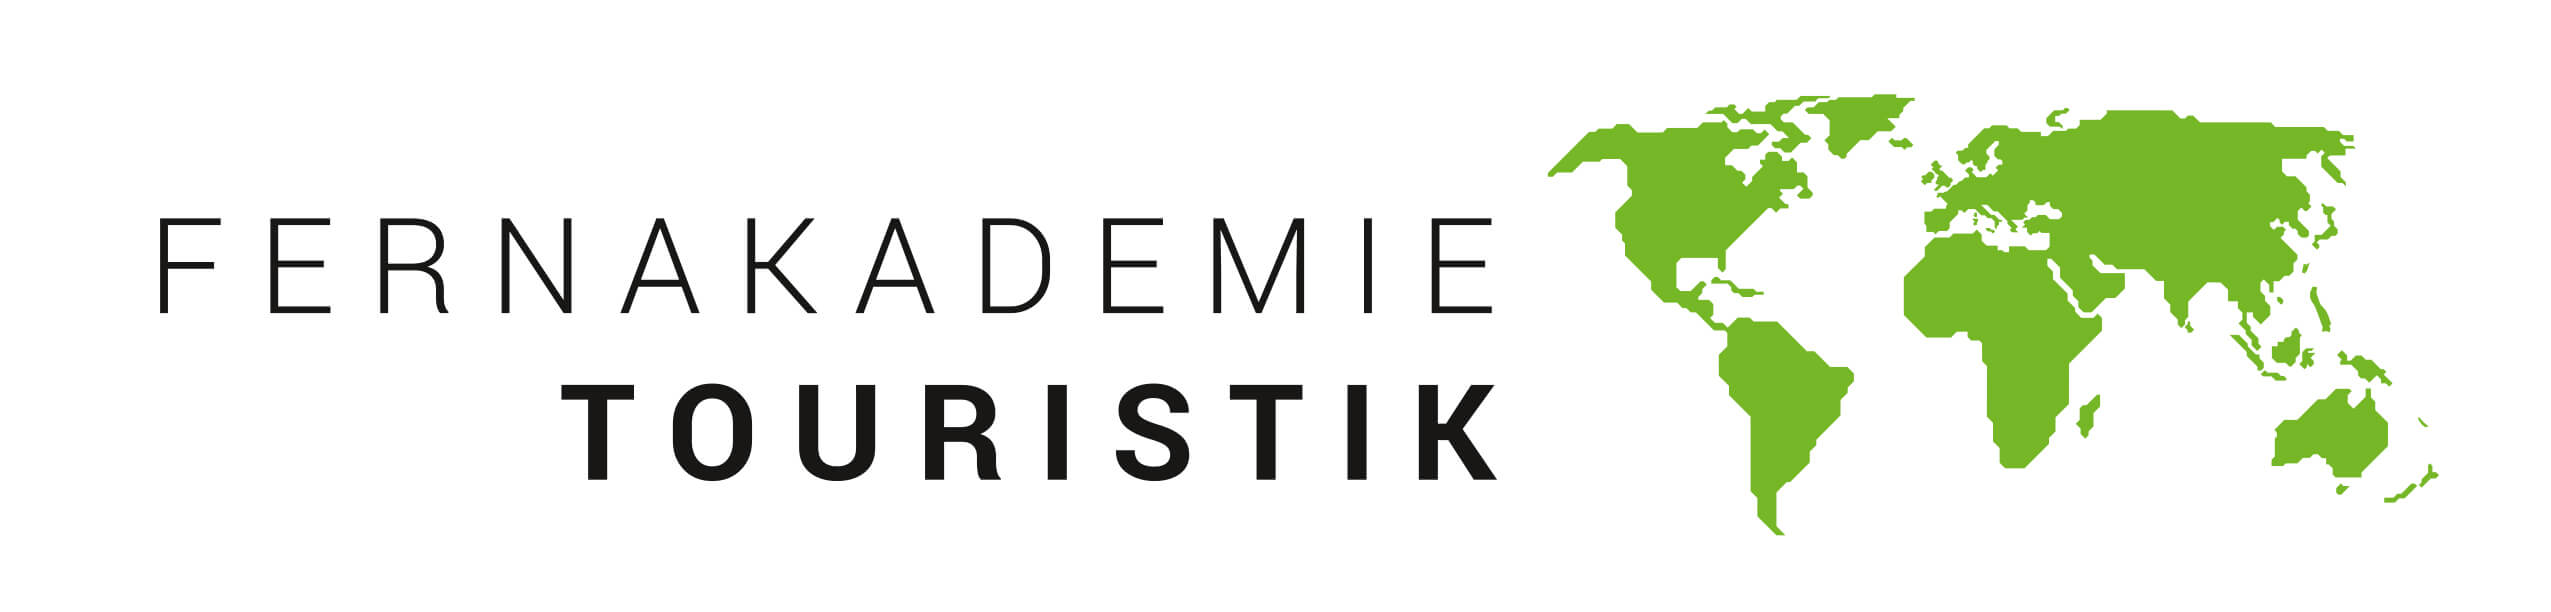 FernAkademie Touristik Logo